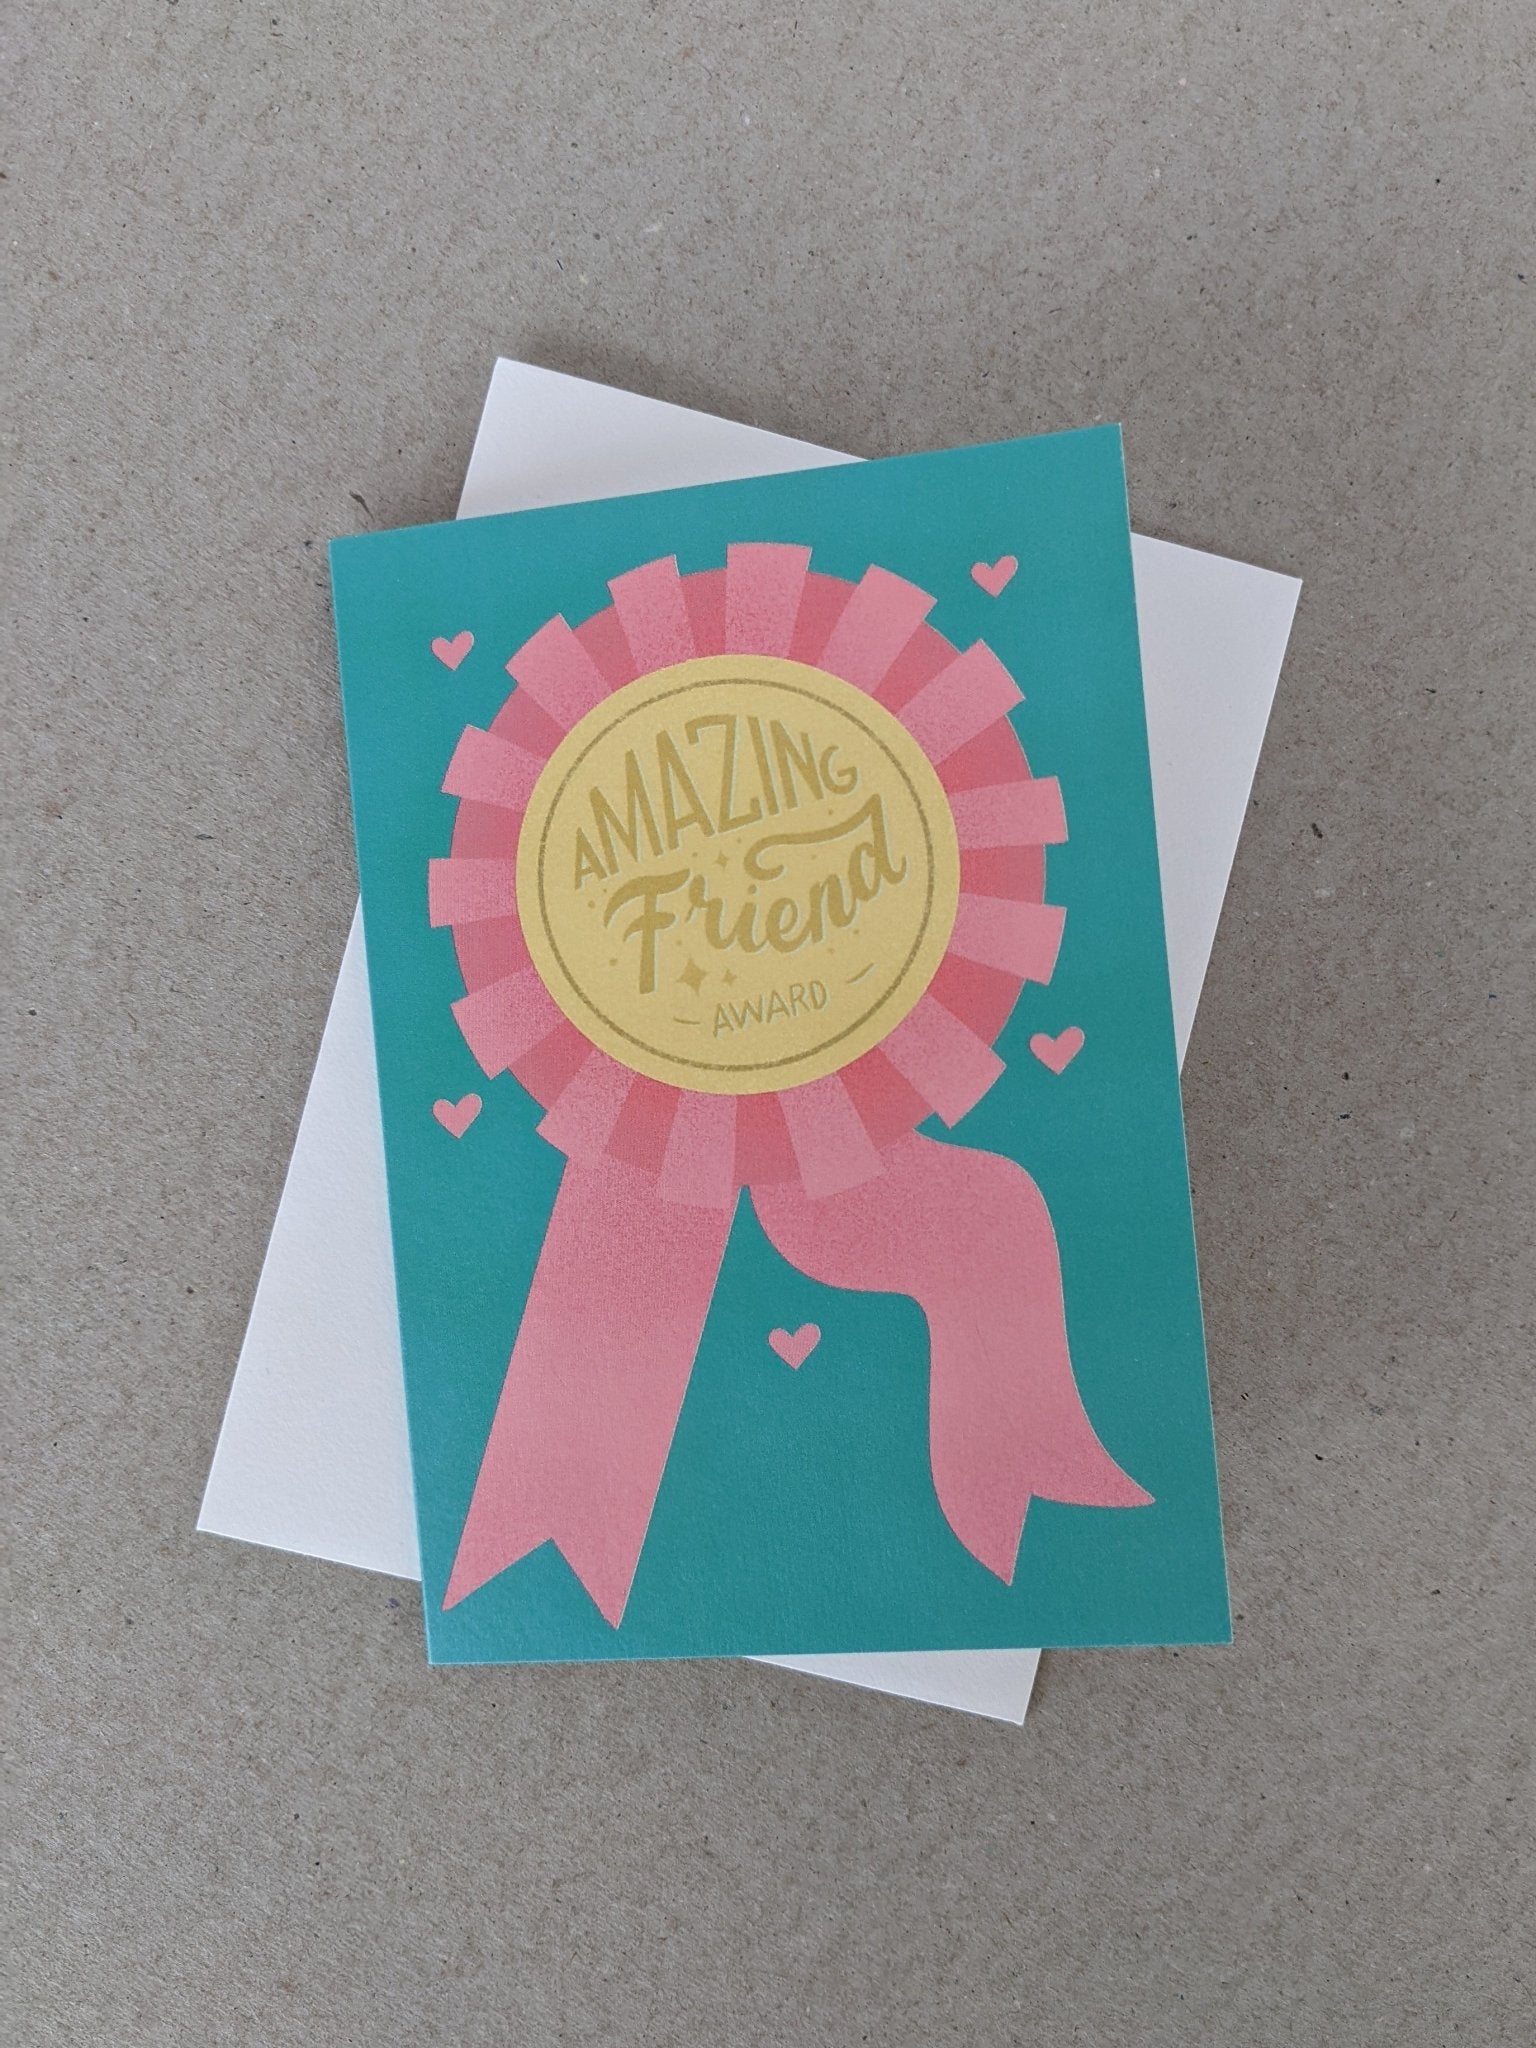 Amazing Friend Award Greeting Card - The Stationery Cupboard